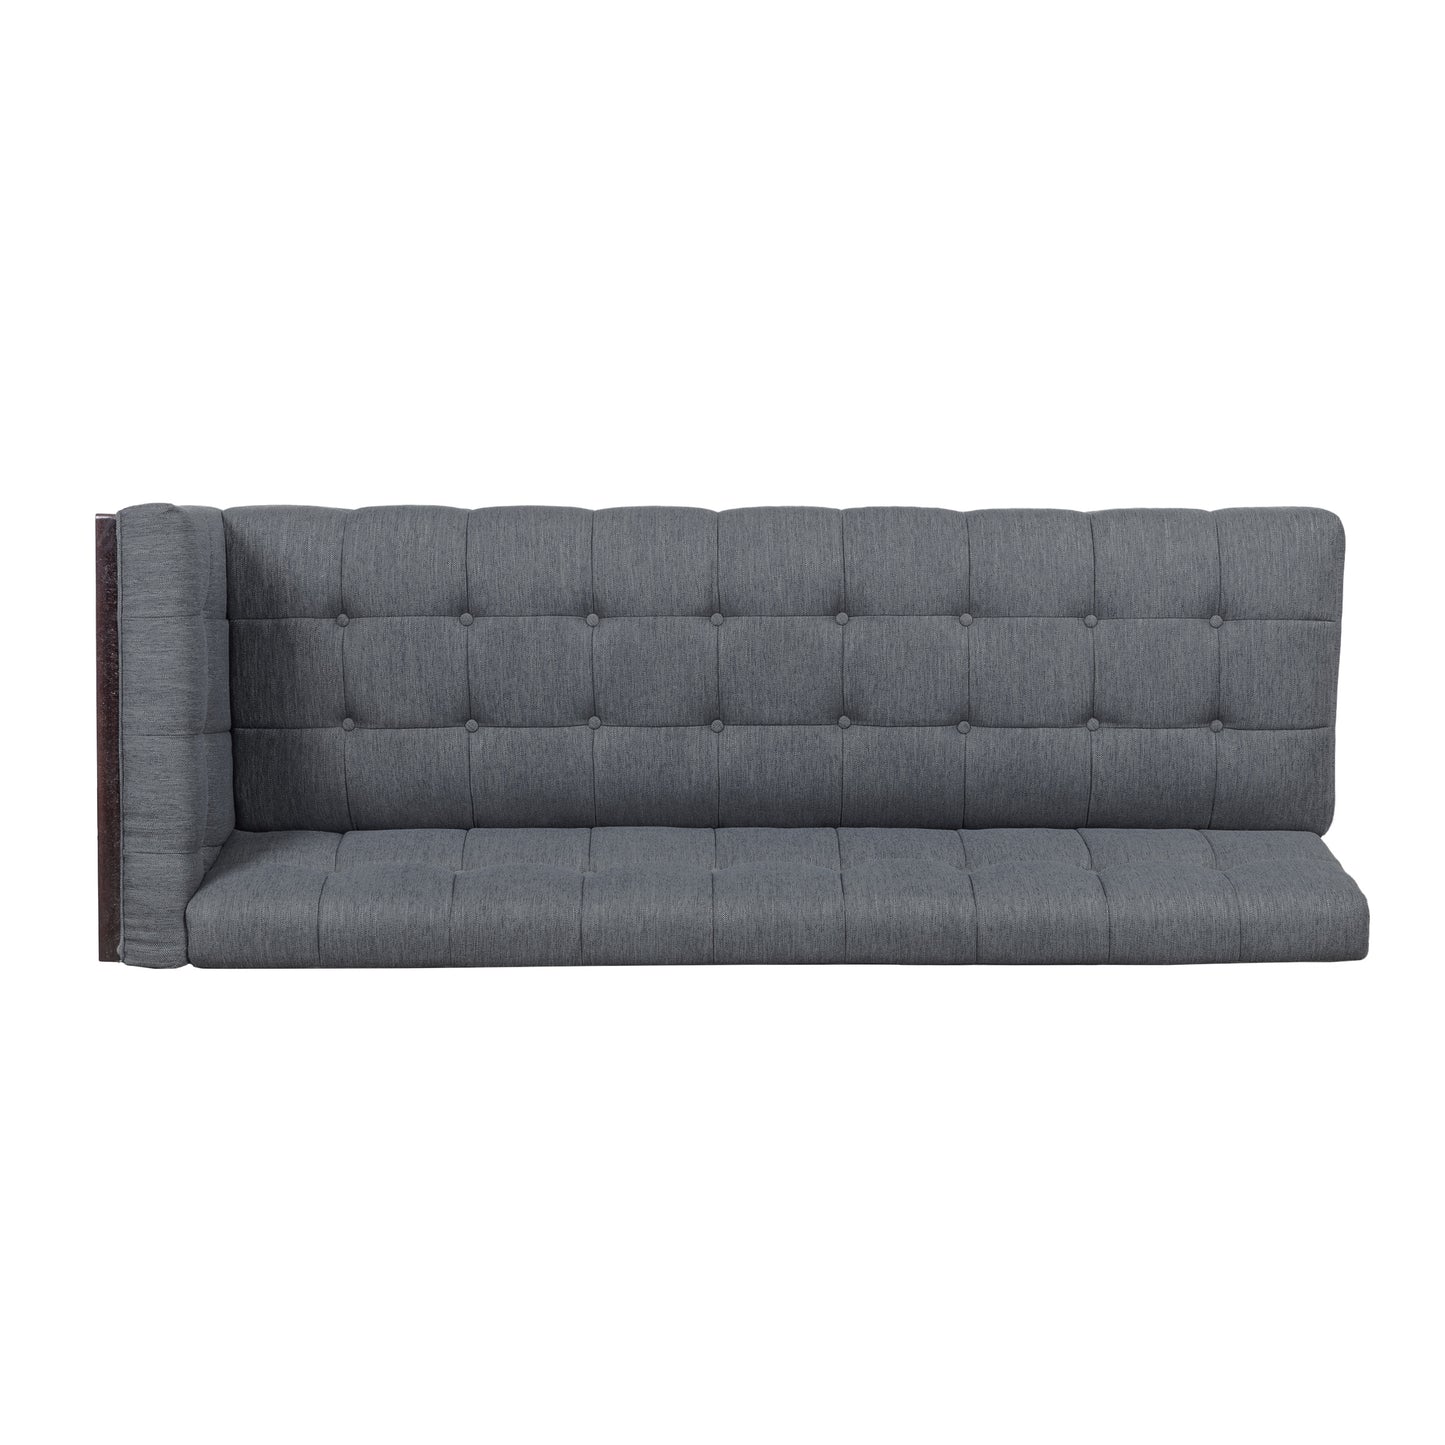 Warnock Mid-Century Modern Fabric Tufted Sectional Sofa Set